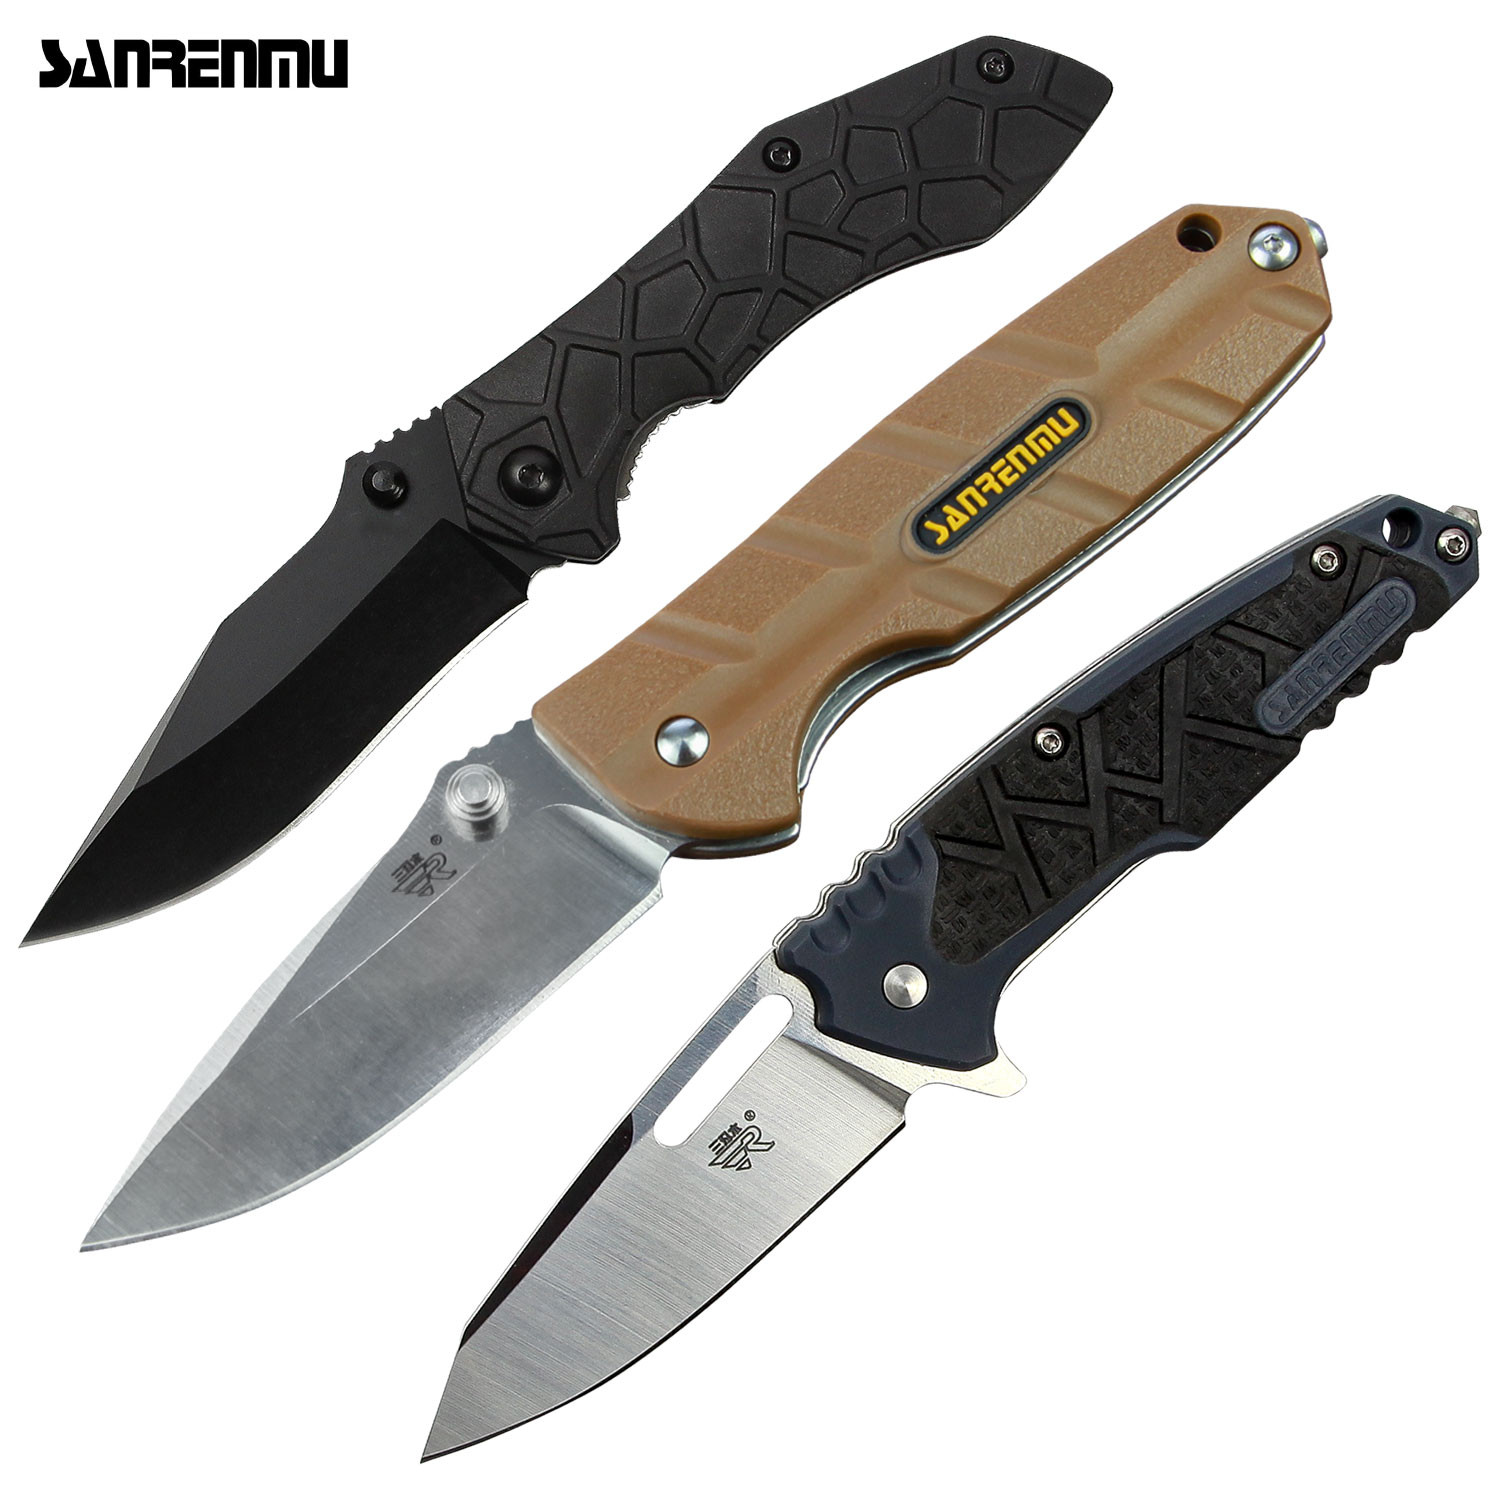 3-PACK: Sanrenmu Folding Pocket Knives - Vol. 7 $22 + Free Shipping